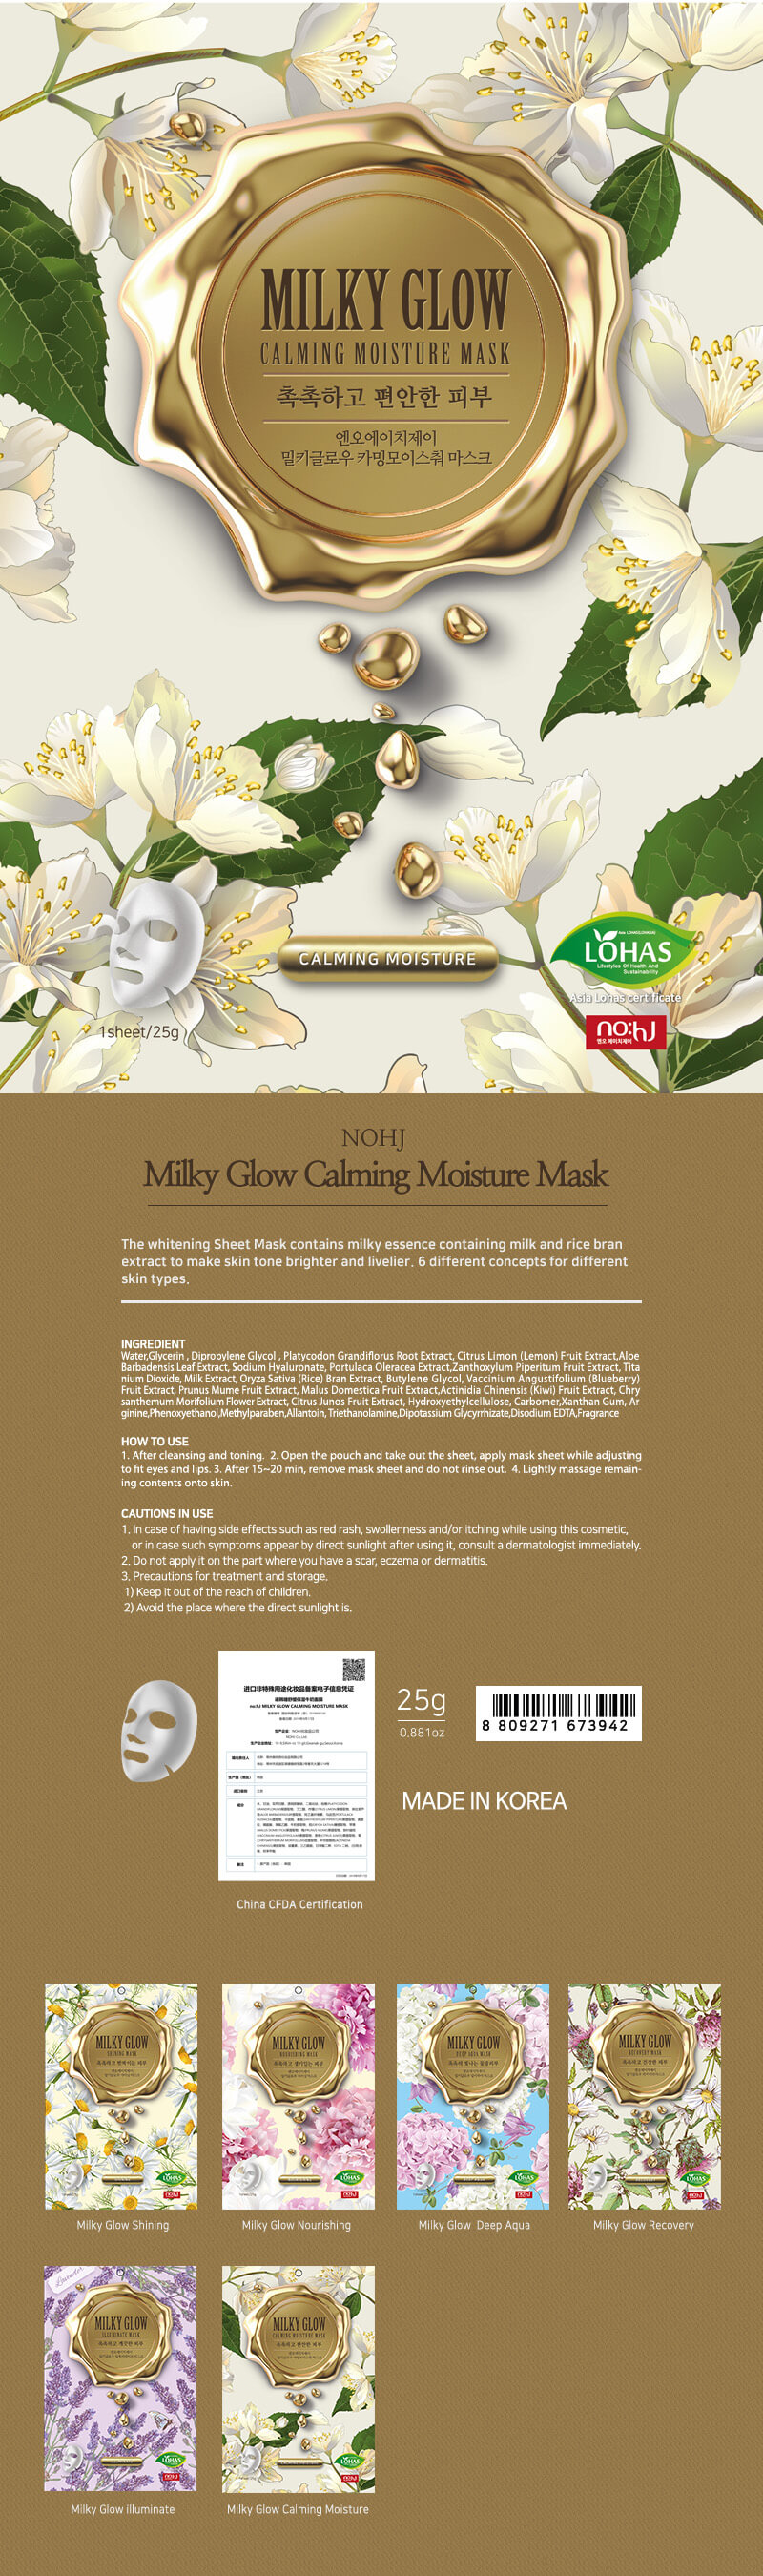  NOHj Milky Glow Mask Sheets Calming Mositure 25 g  มาสก์น้ำนม อัดแน่นด้วยส่วนผสมของน้ำนมและรำข้าว บำรุงผิวขาว นุ่มชุุ่มชื้น ลดเม็ดสีเมลานินและสีผิวที่ไม่สม่ำเสมอ ให้ผิวเปล่งประกายโกลว์สวย